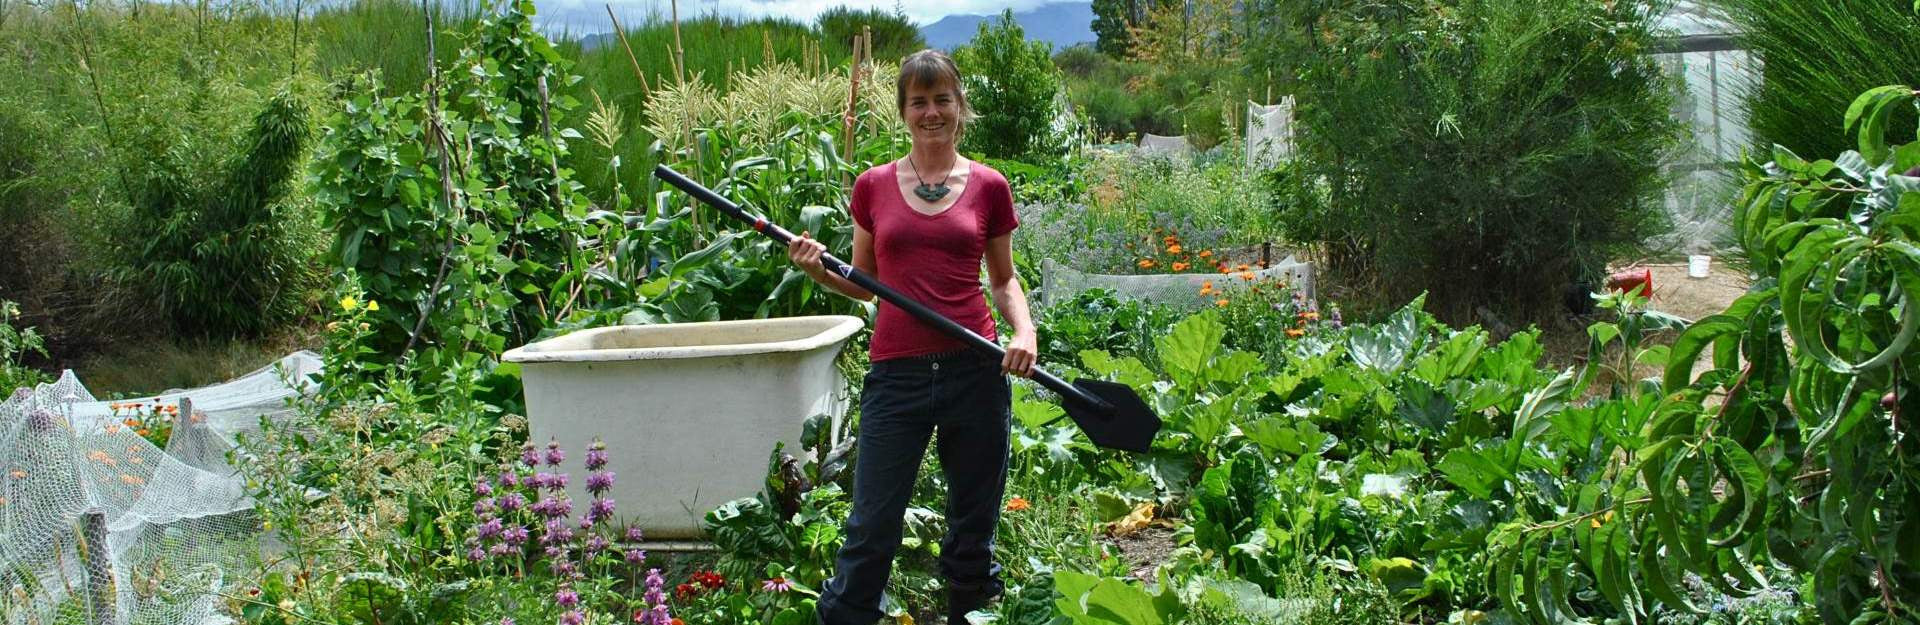 Gardening and Digging Tool